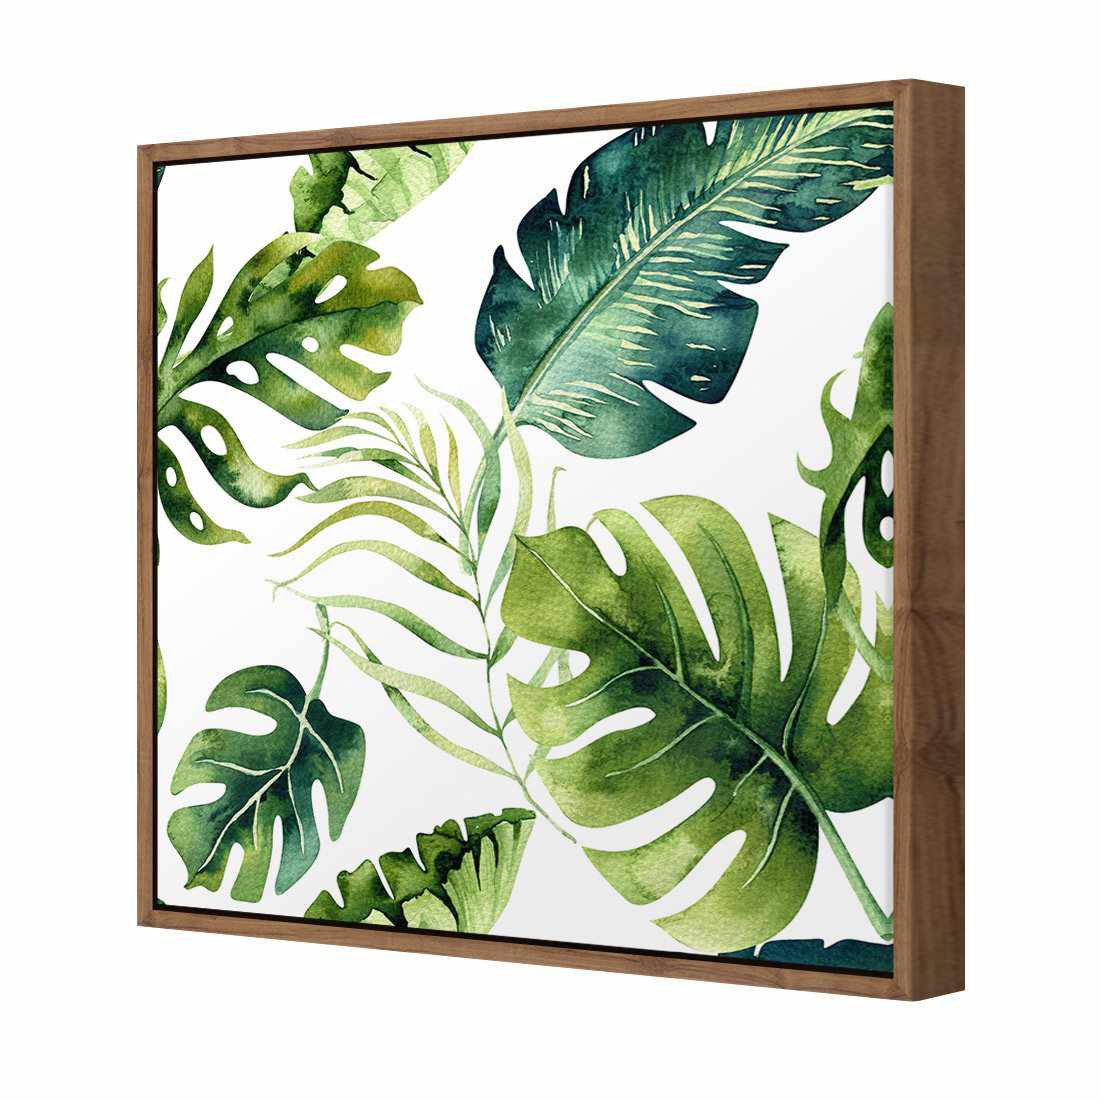 Fascinating Foliage Canvas Art-Canvas-Wall Art Designs-30x30cm-Canvas - Natural Frame-Wall Art Designs